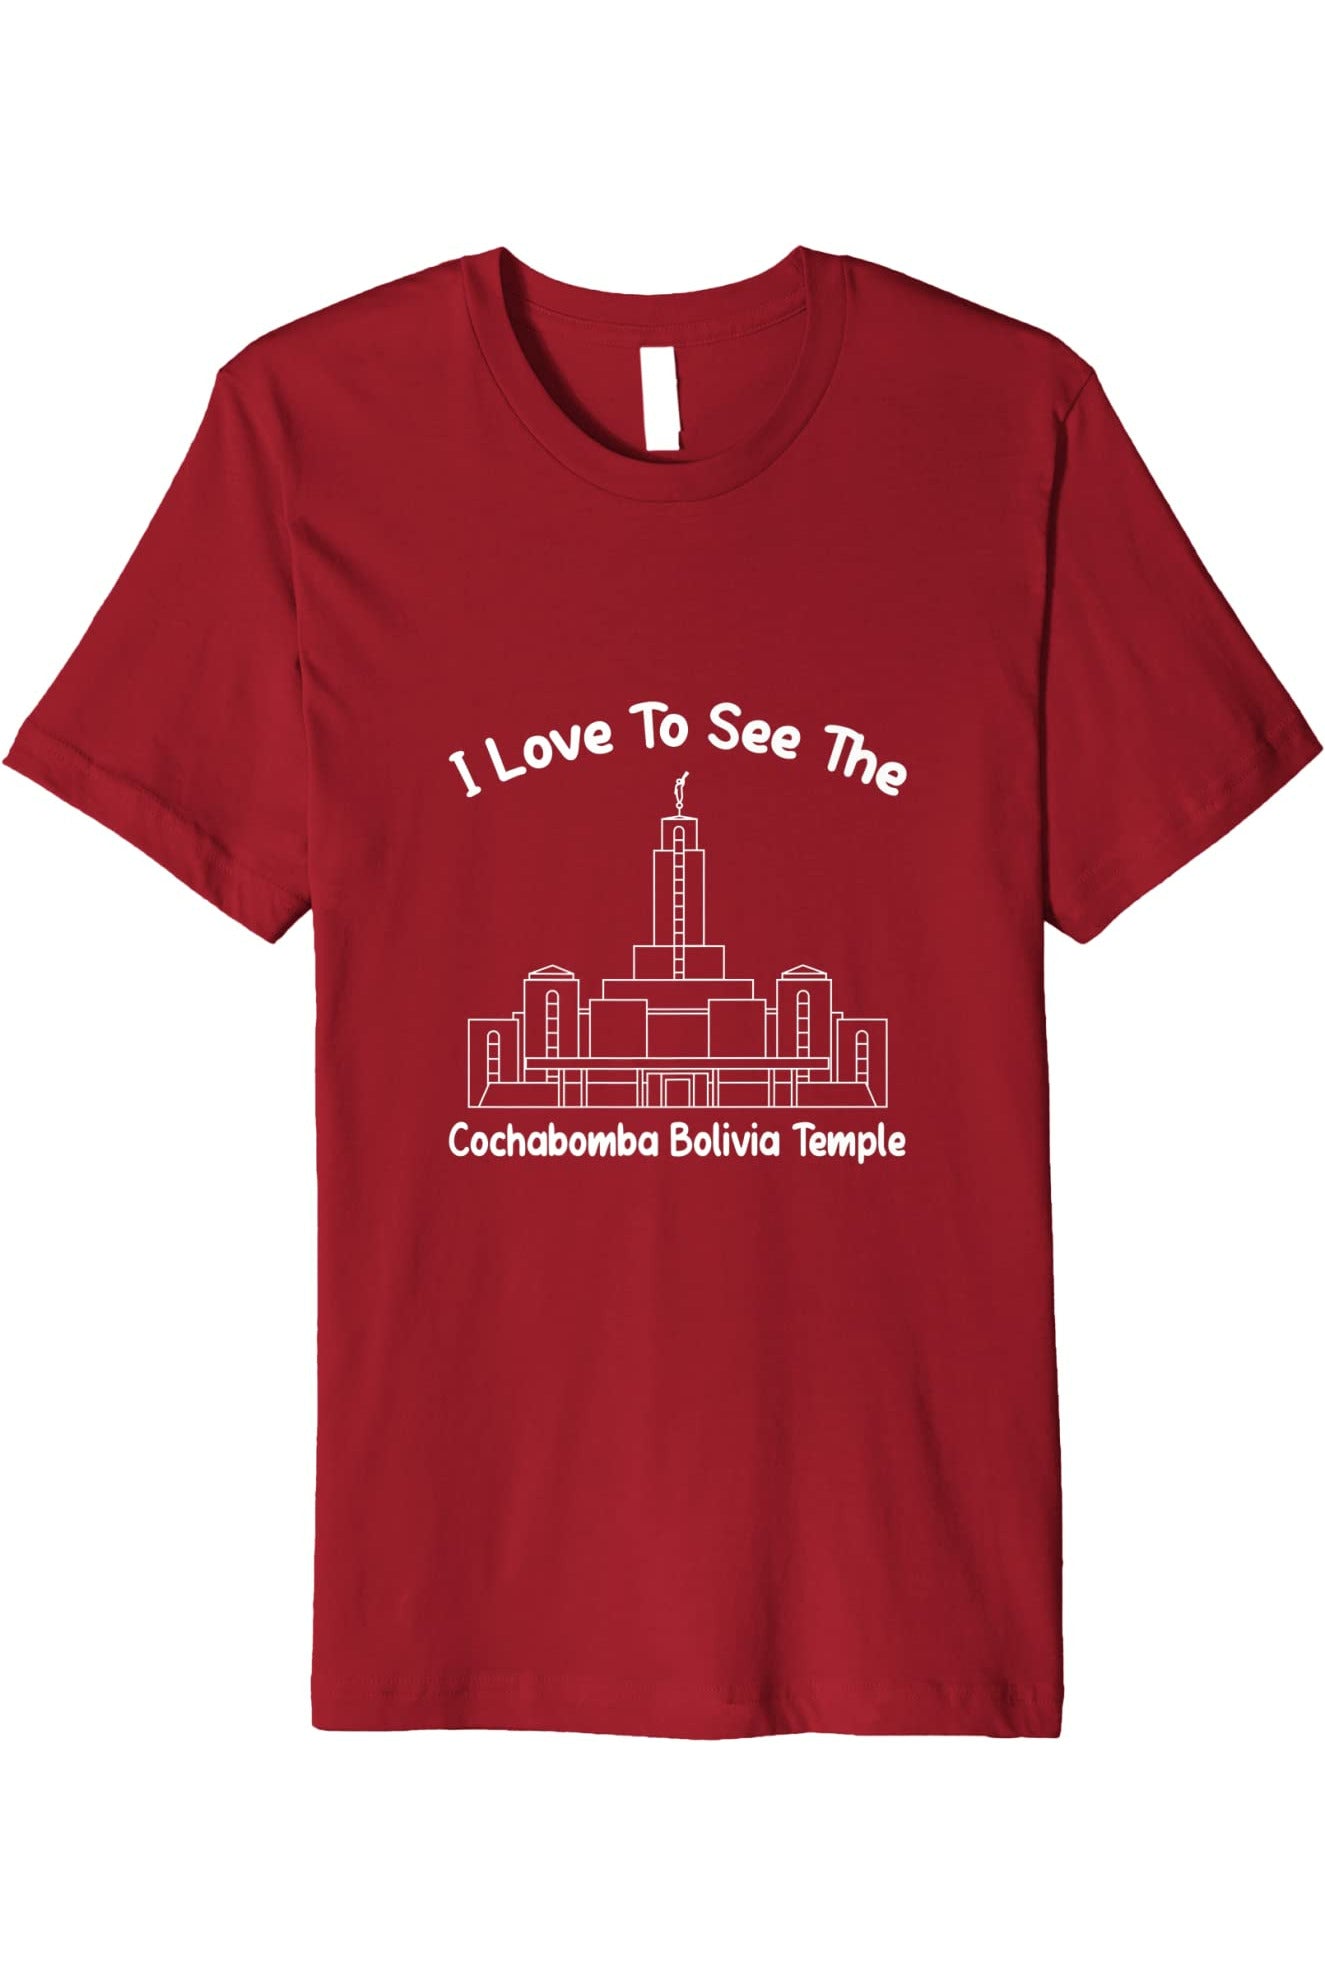 Cochabamba Bolivia Temple T-Shirt - Premium - Primary Style (English) US